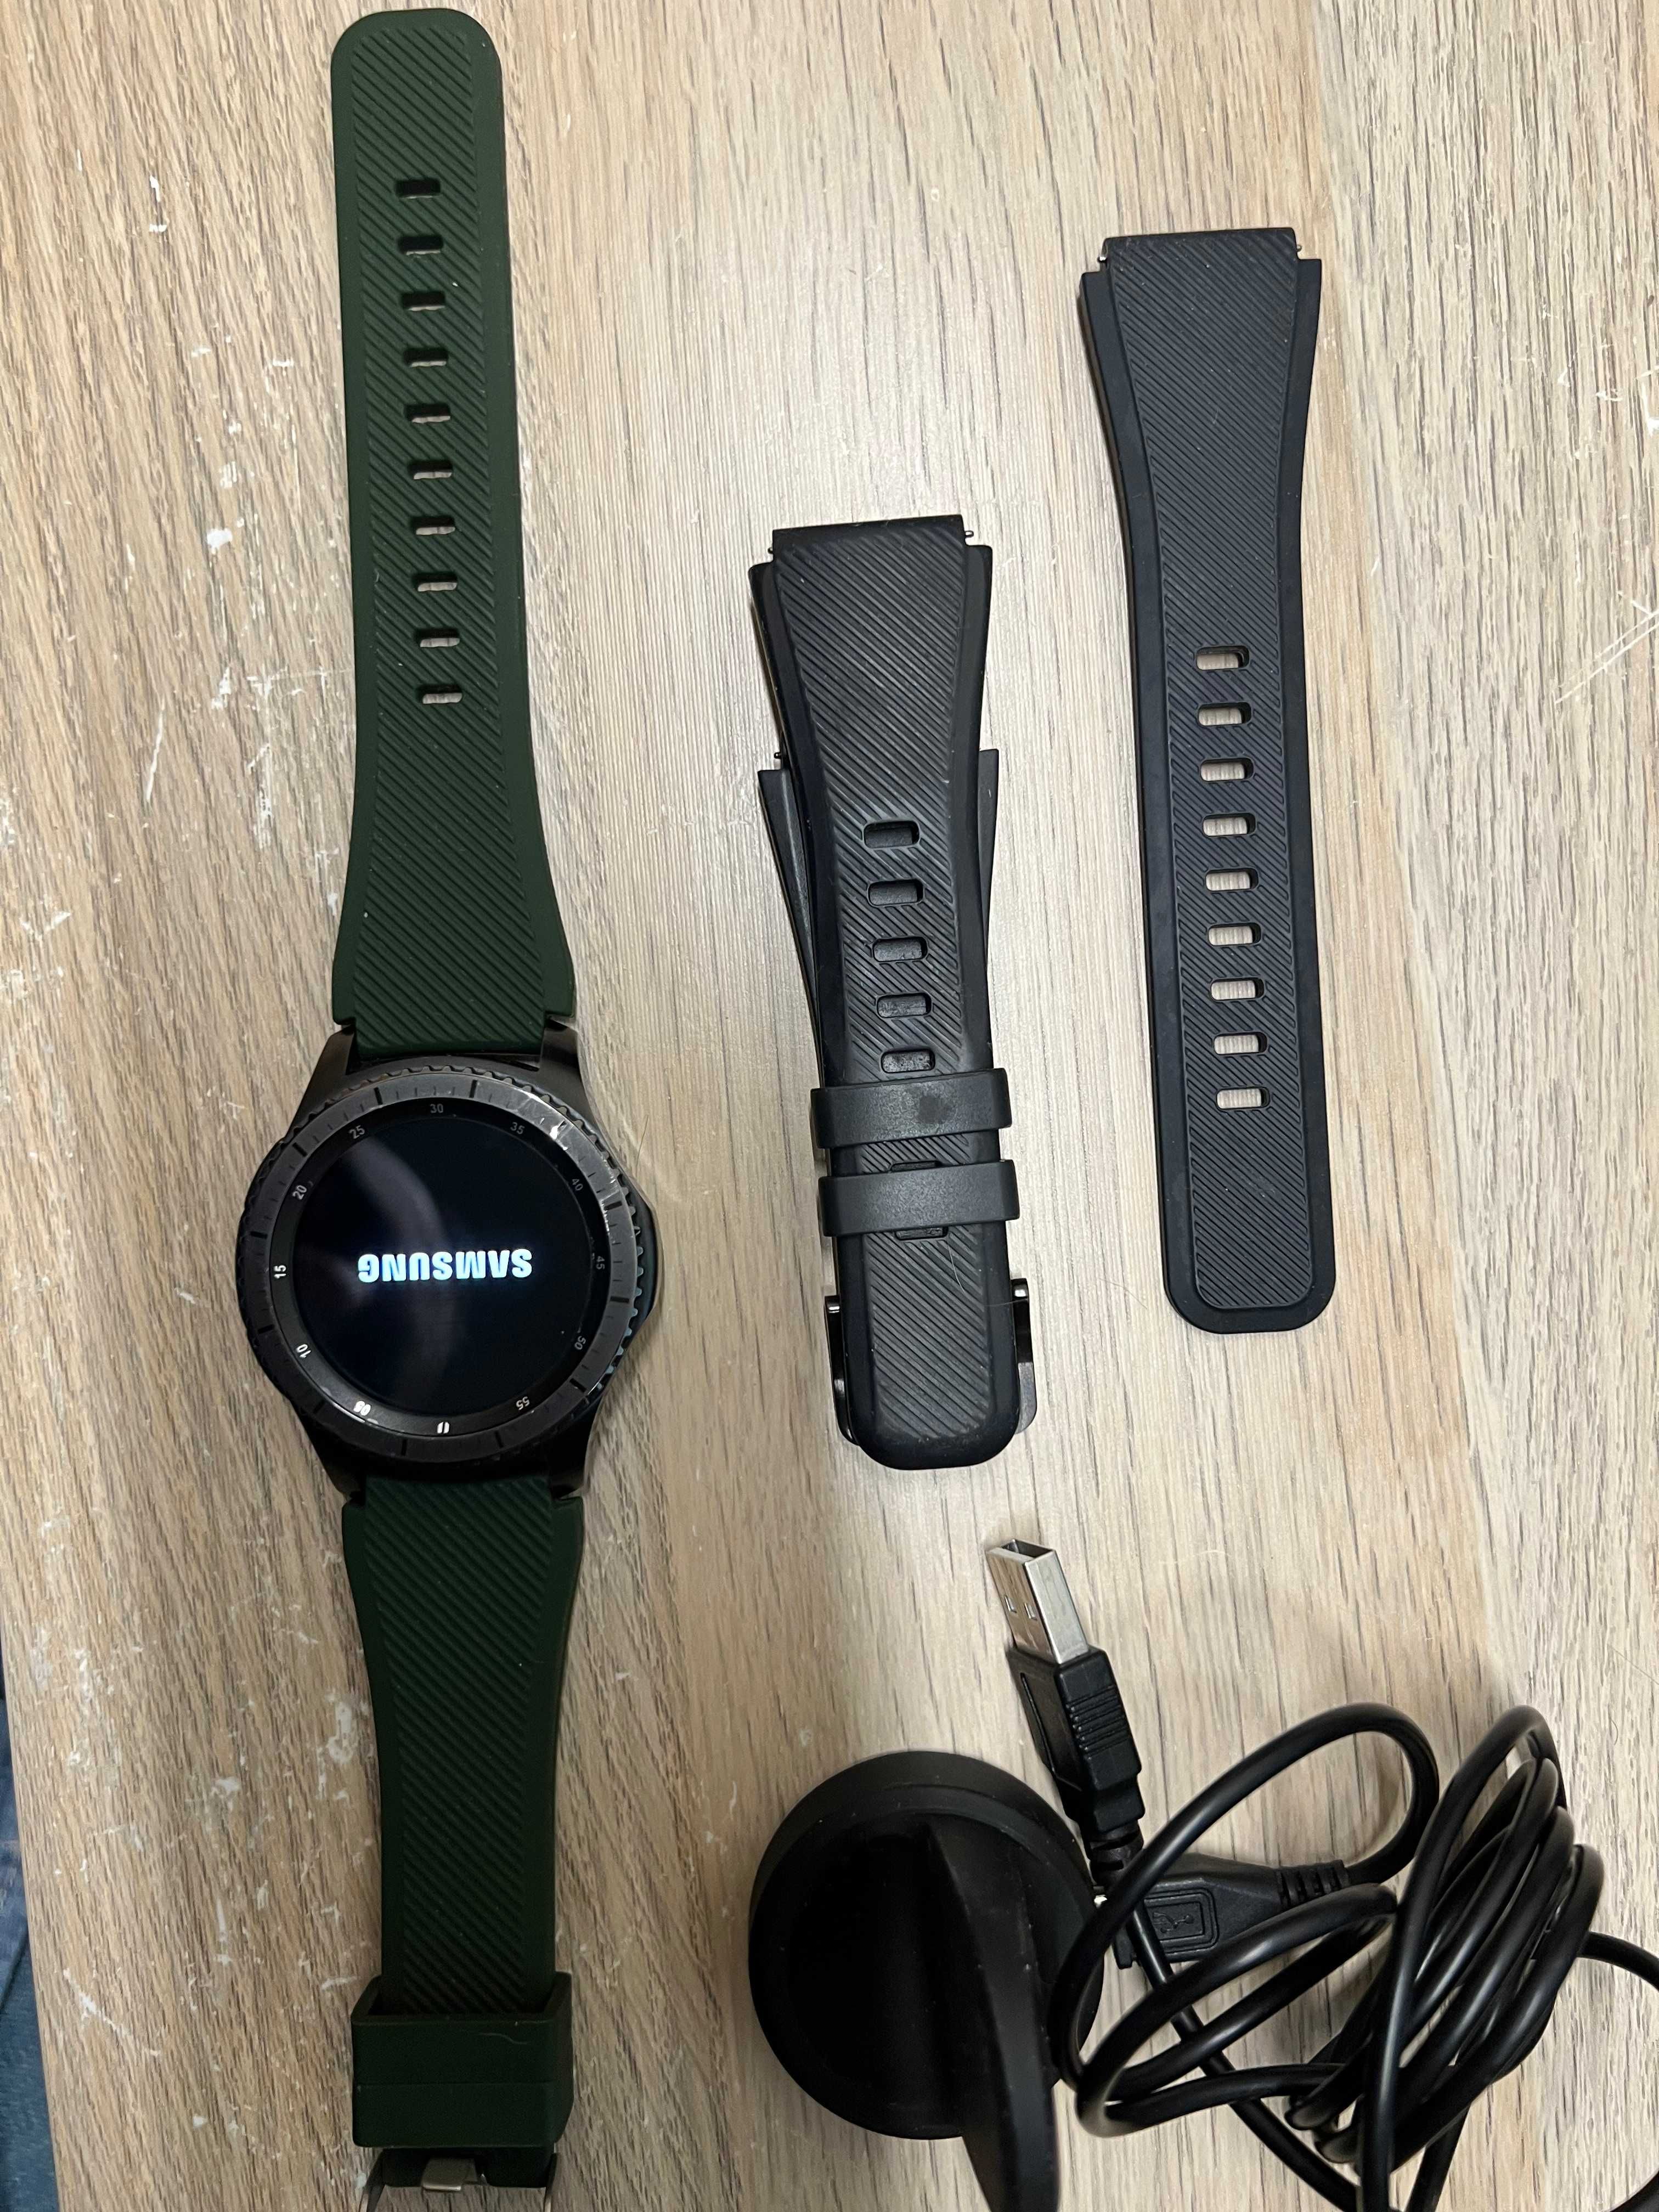 Samsung Smart Watch Gear S3 Frontier